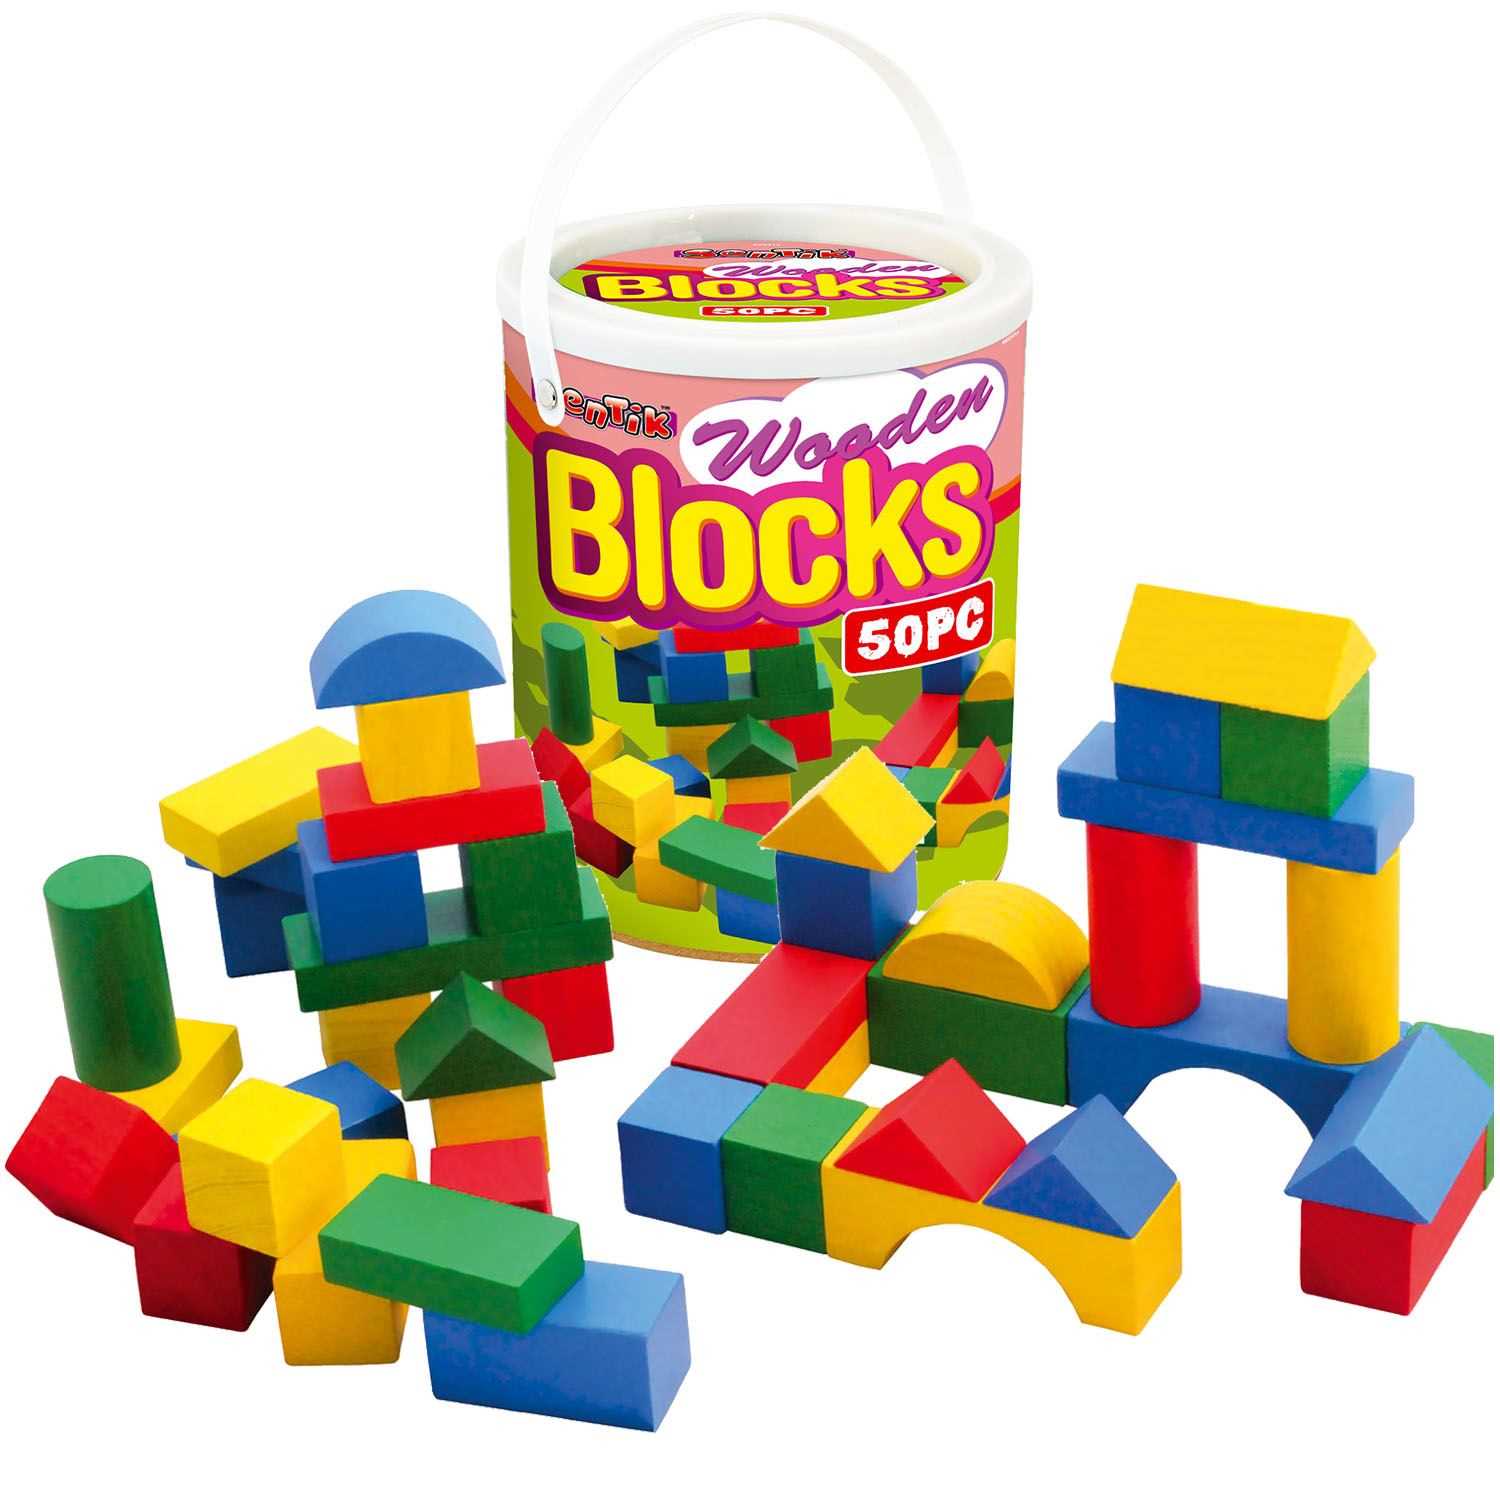 50 Bricks in a Tub Wooden Construction Building Blocks Bricks Children's Wood Toys Pieces Xmas Gift